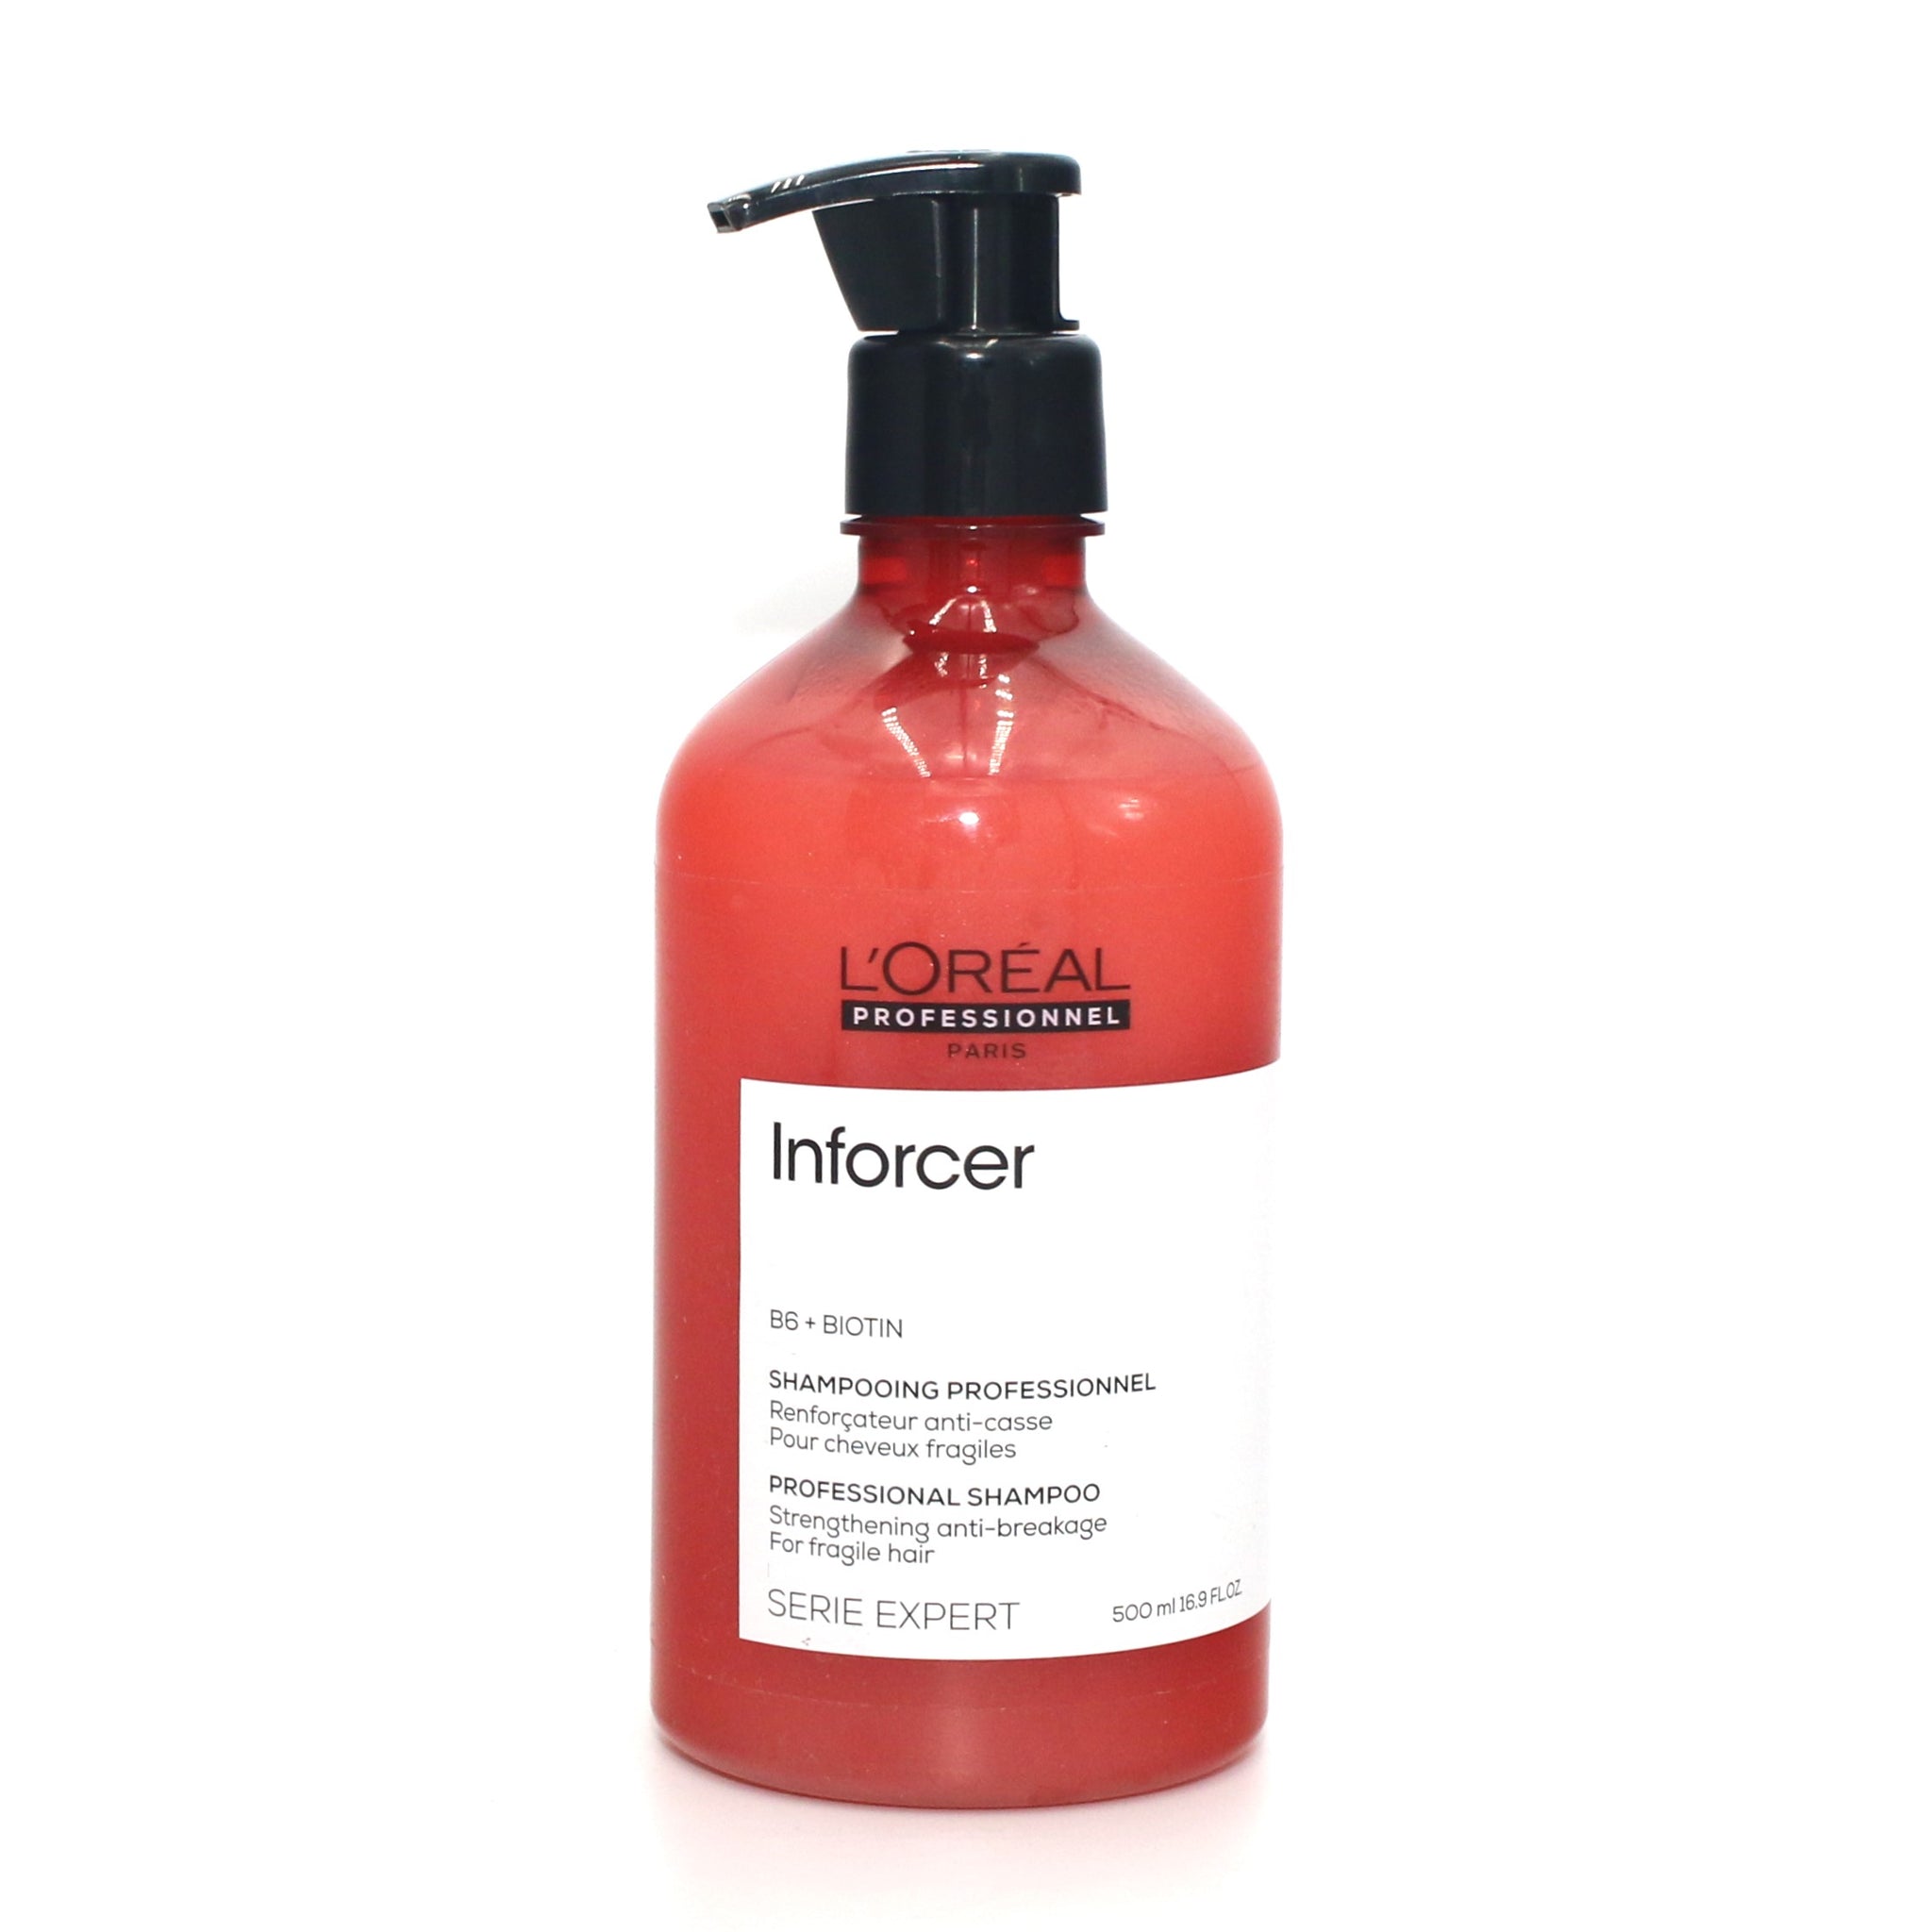 Loreal Inforcer Professional Shampoo Strengthening Anti Breakage 16.9 oz